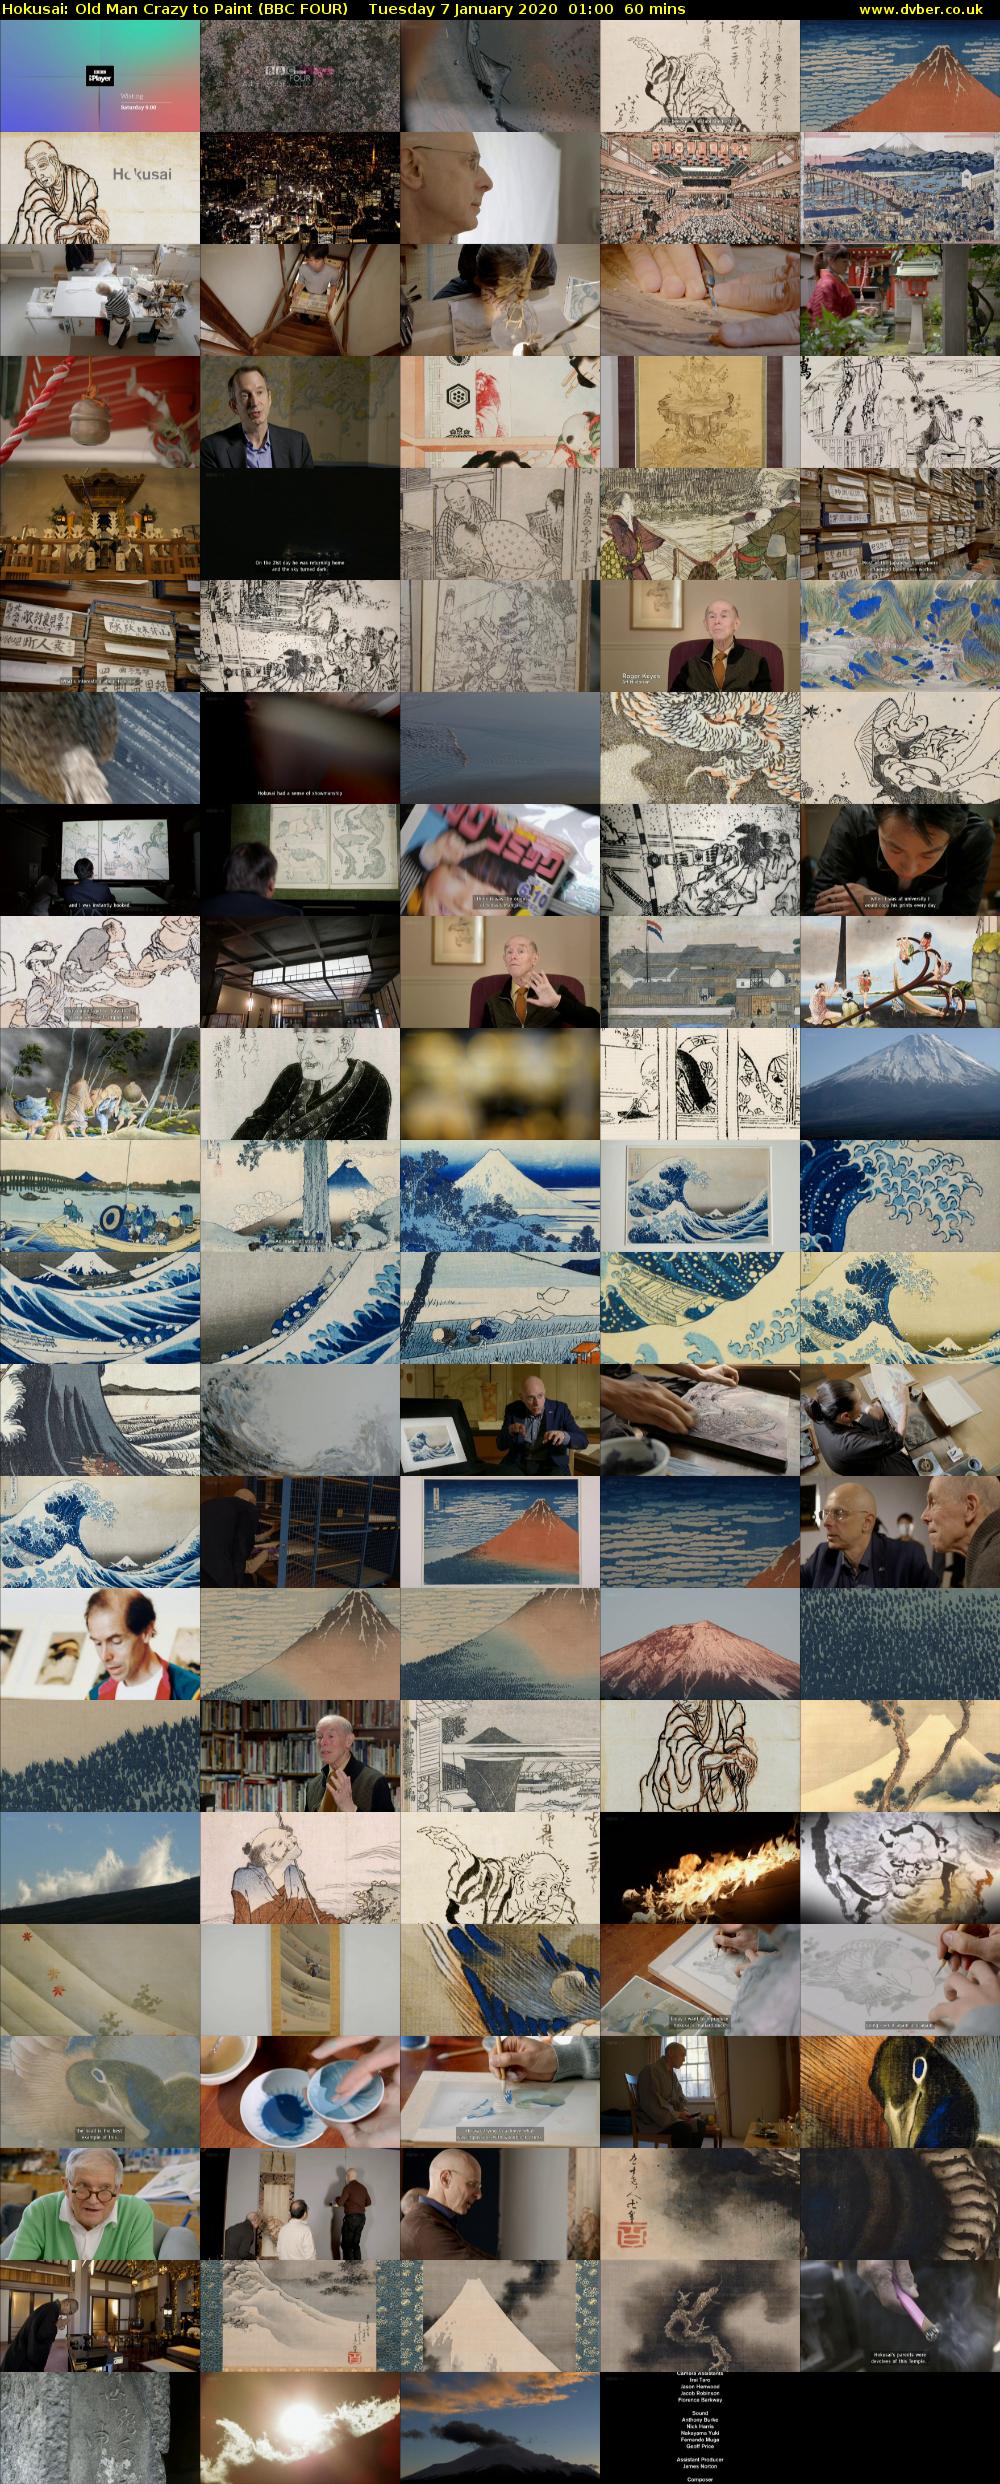 Hokusai: Old Man Crazy to Paint (BBC FOUR) Tuesday 7 January 2020 01:00 - 02:00